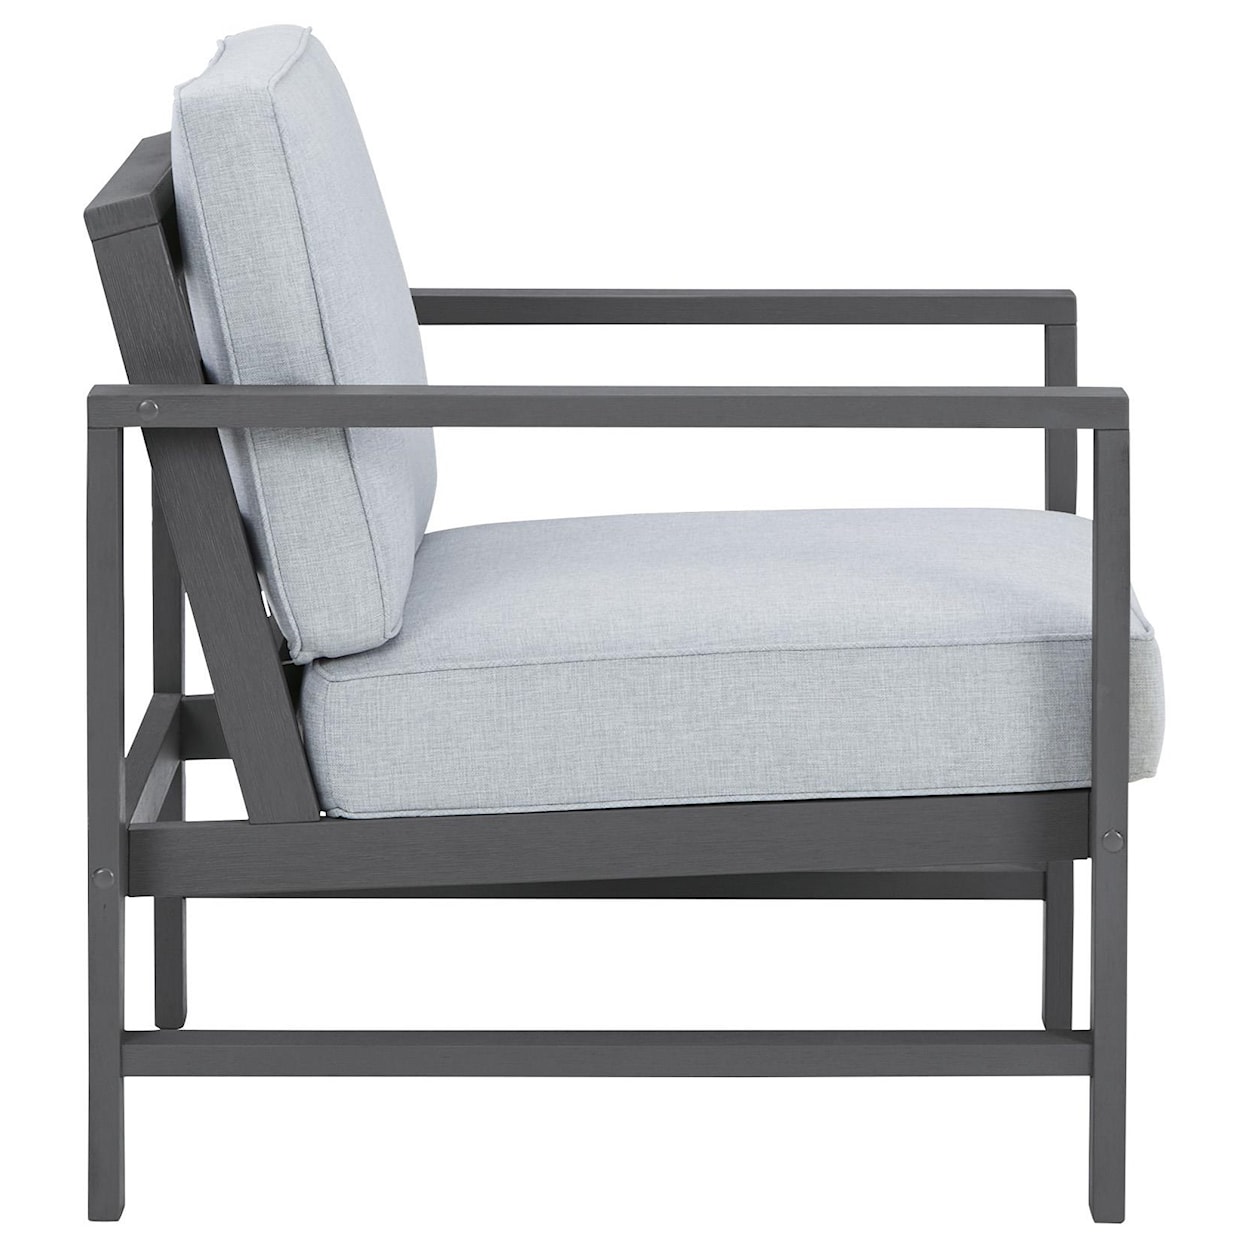 Belfort Select Herrington Lounge Chair w/ Cushion